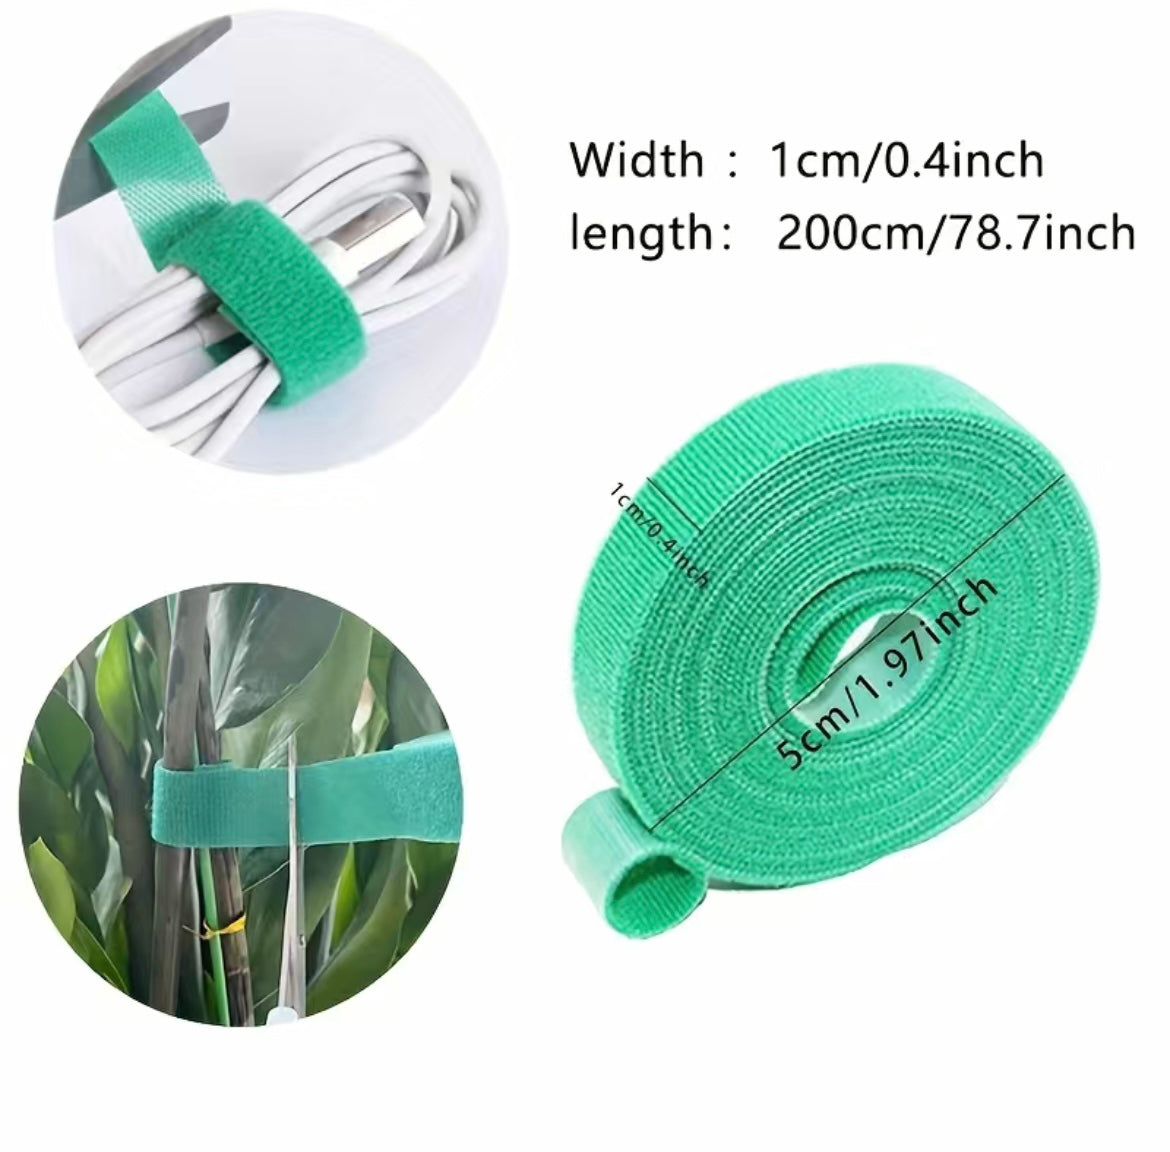 Garden cable ties